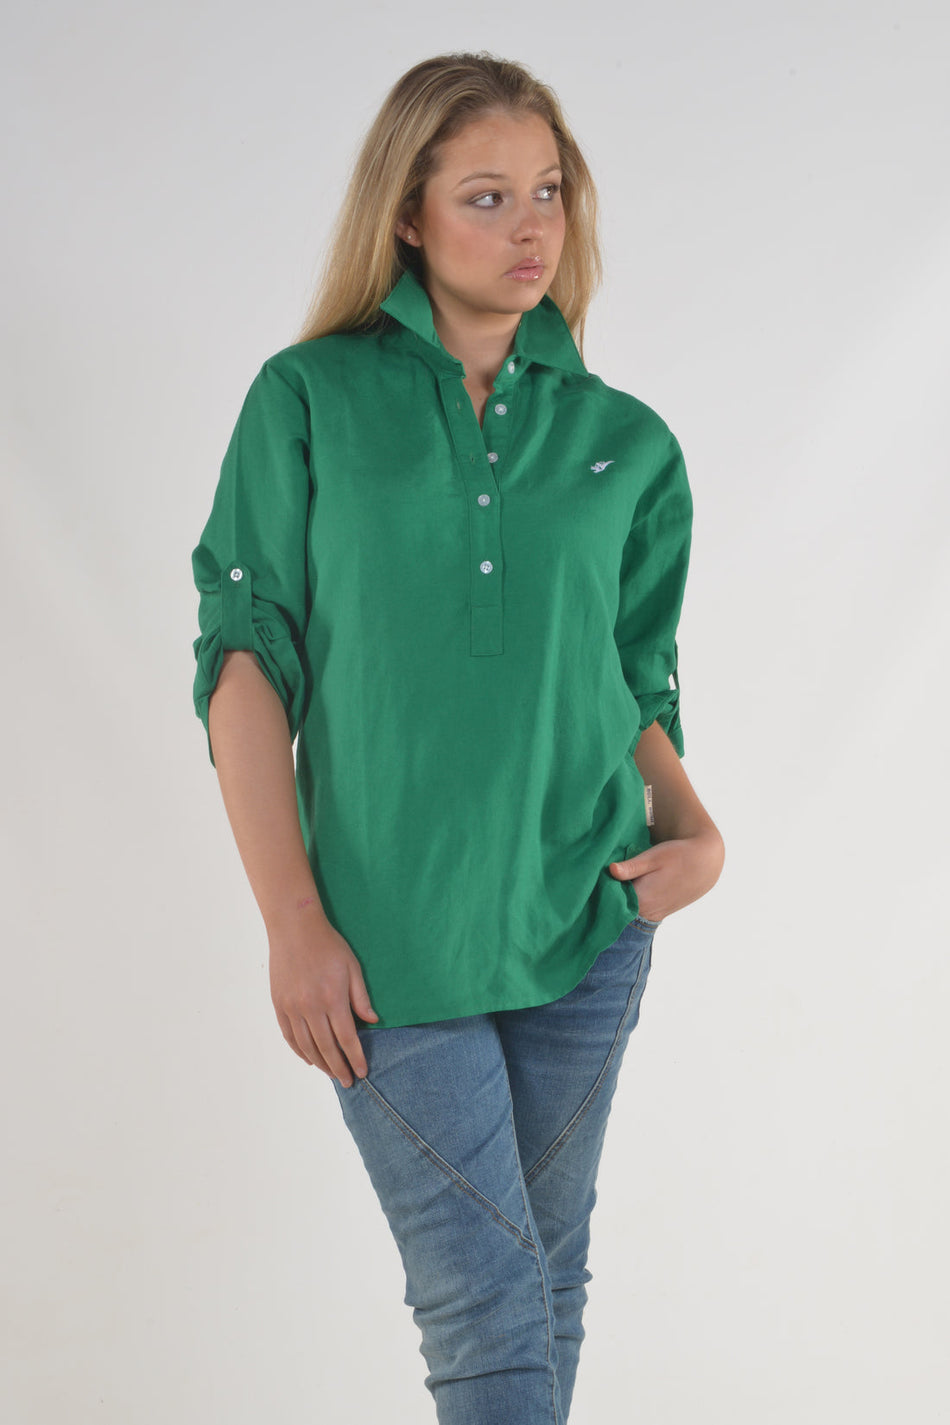 Bullrush - Ladies Linen Tab Shirt in Green